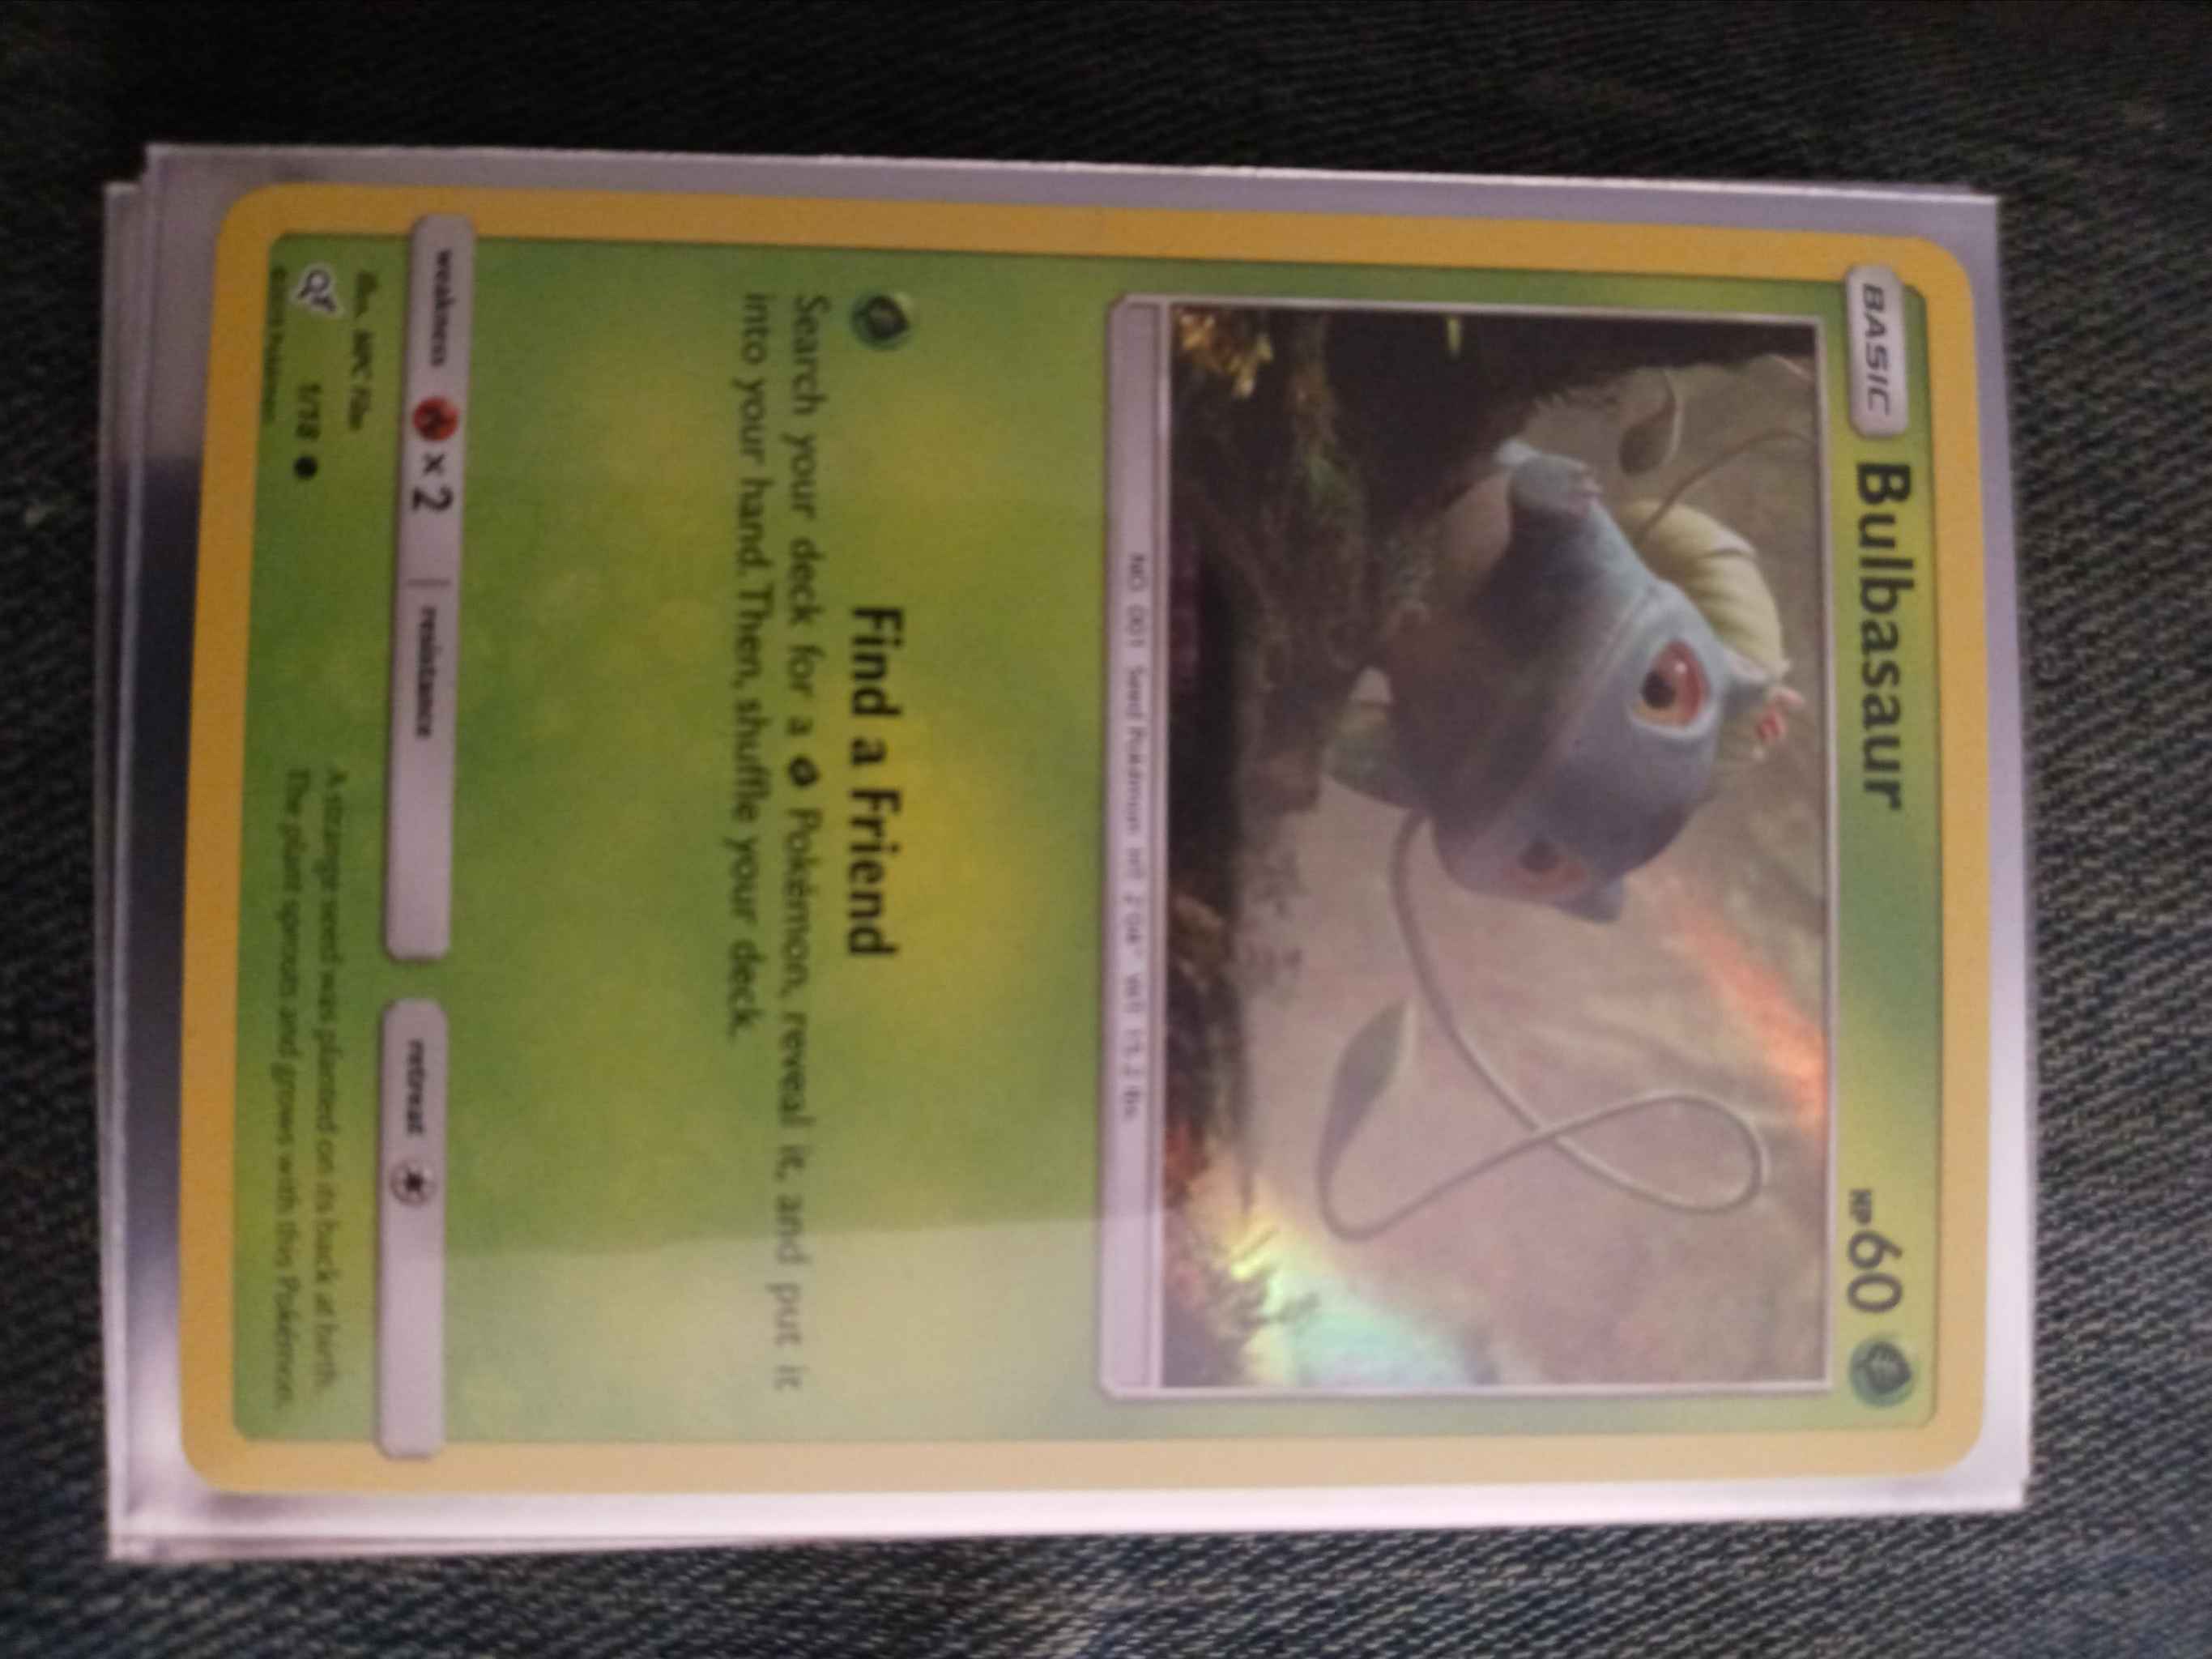 1/18 Pokemon TCG Detective Pikachu Common Holo Foil Card Bulbasaur